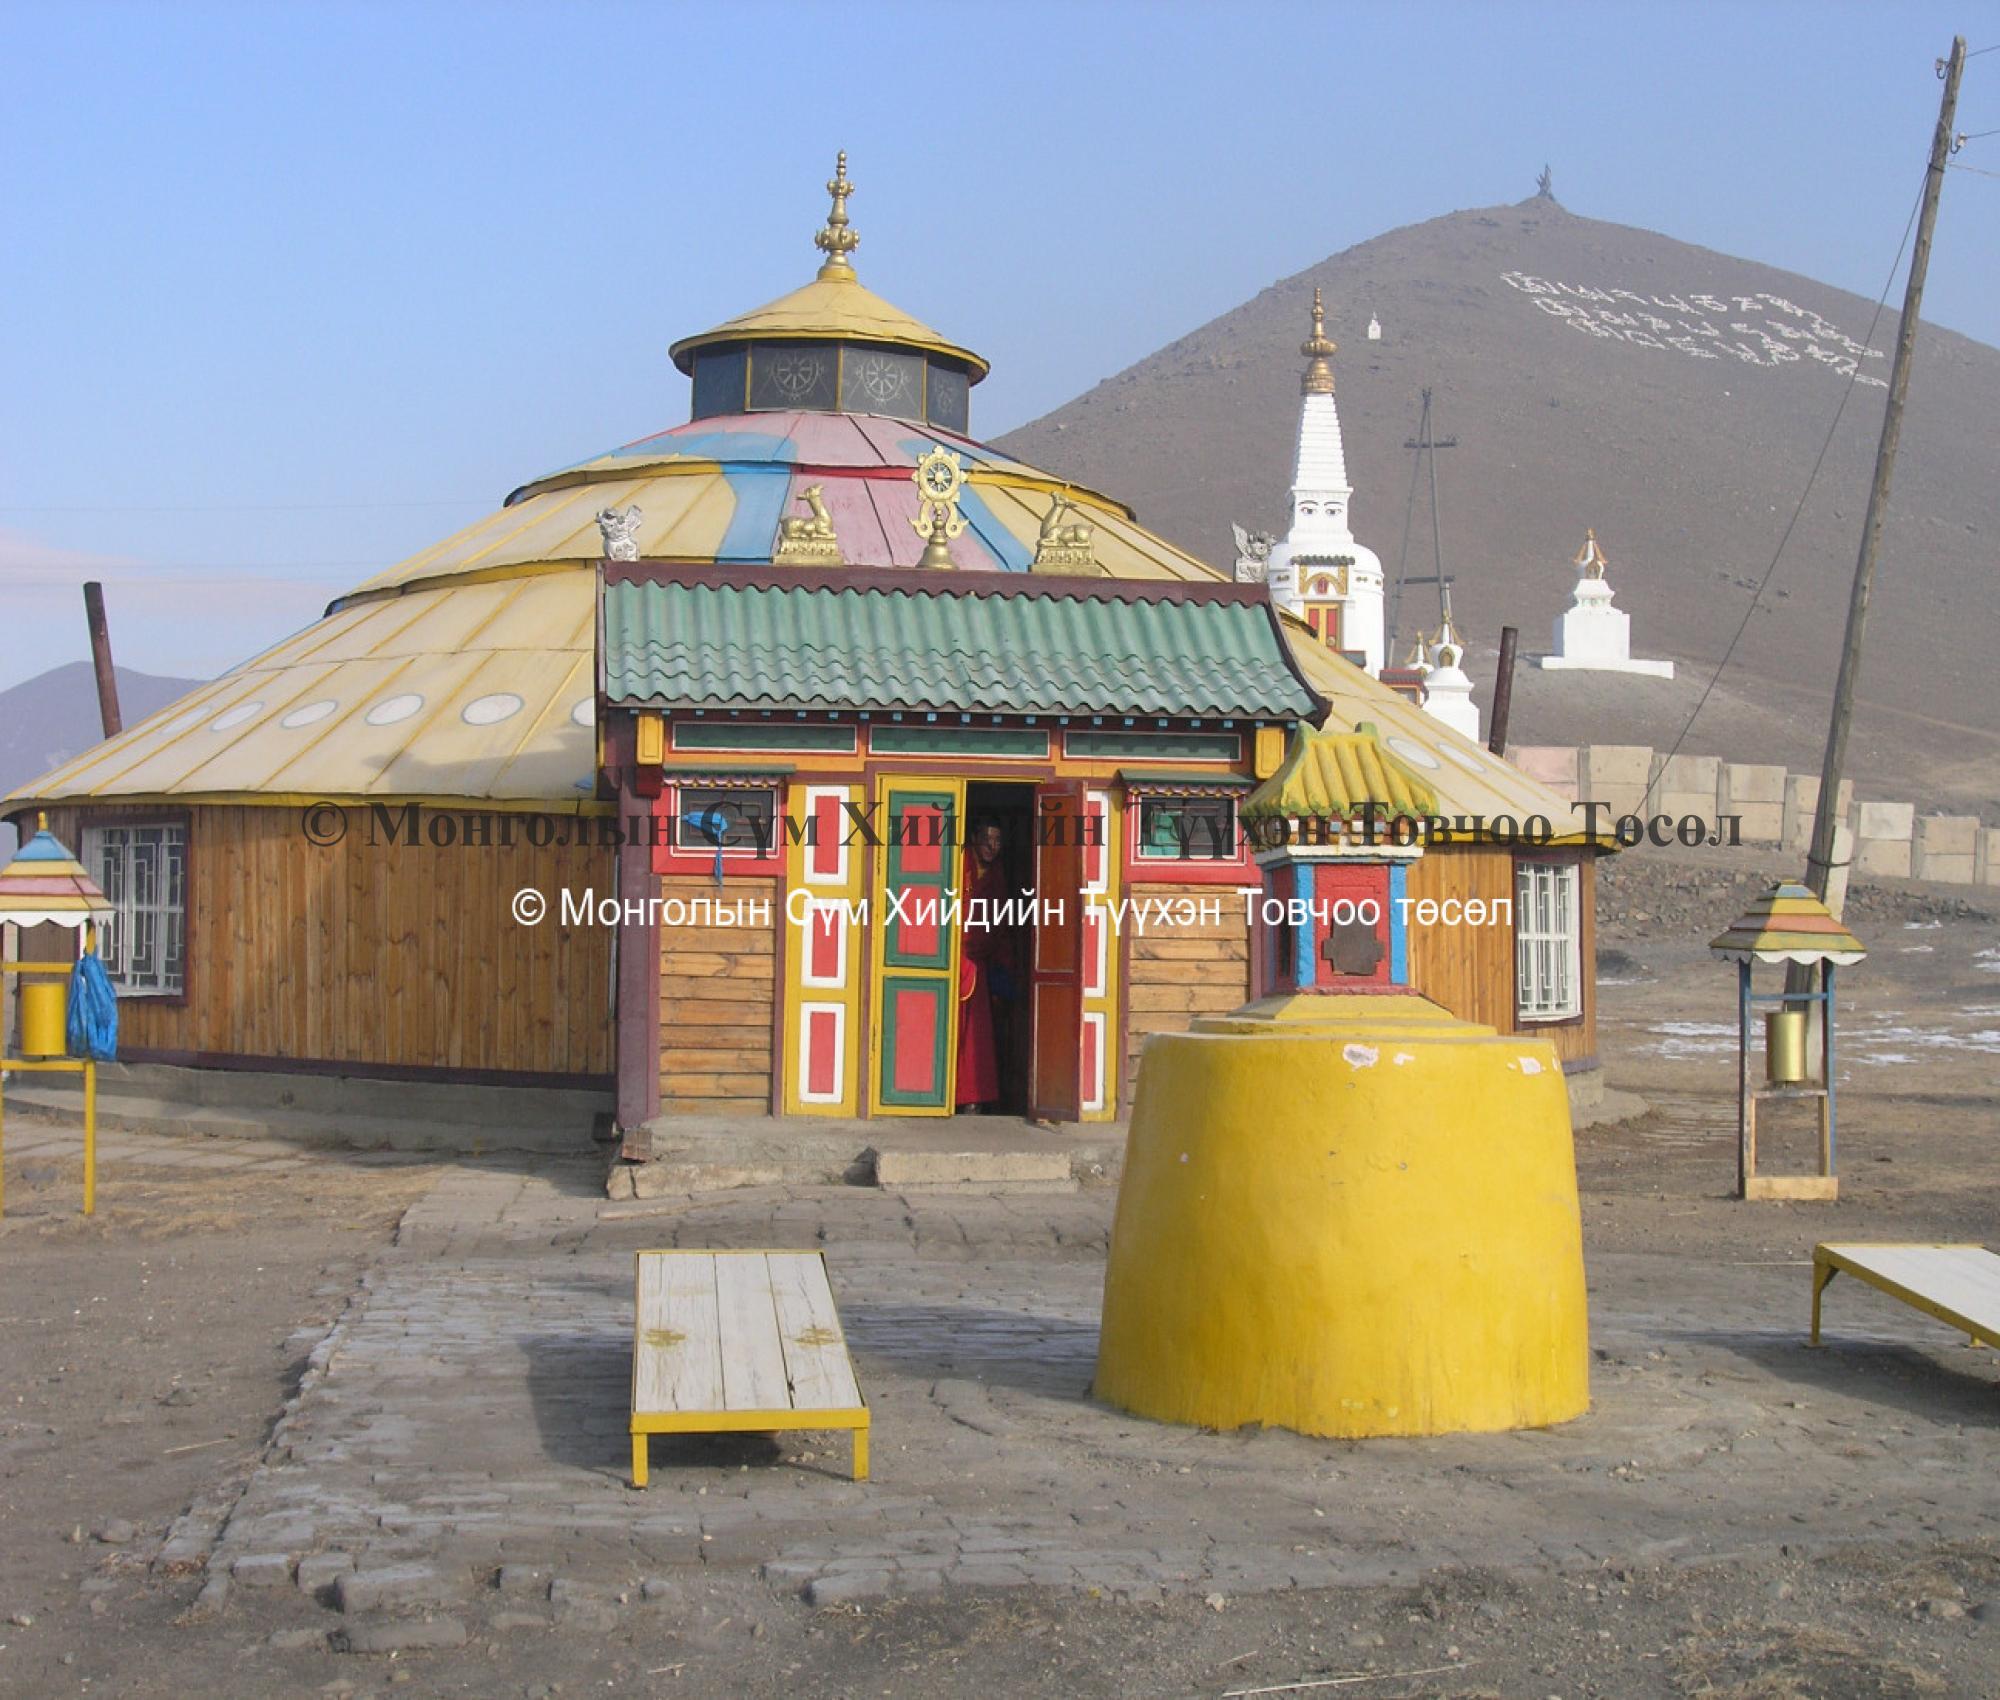 Ger Temple with Jarankhashar stupa behind and the 